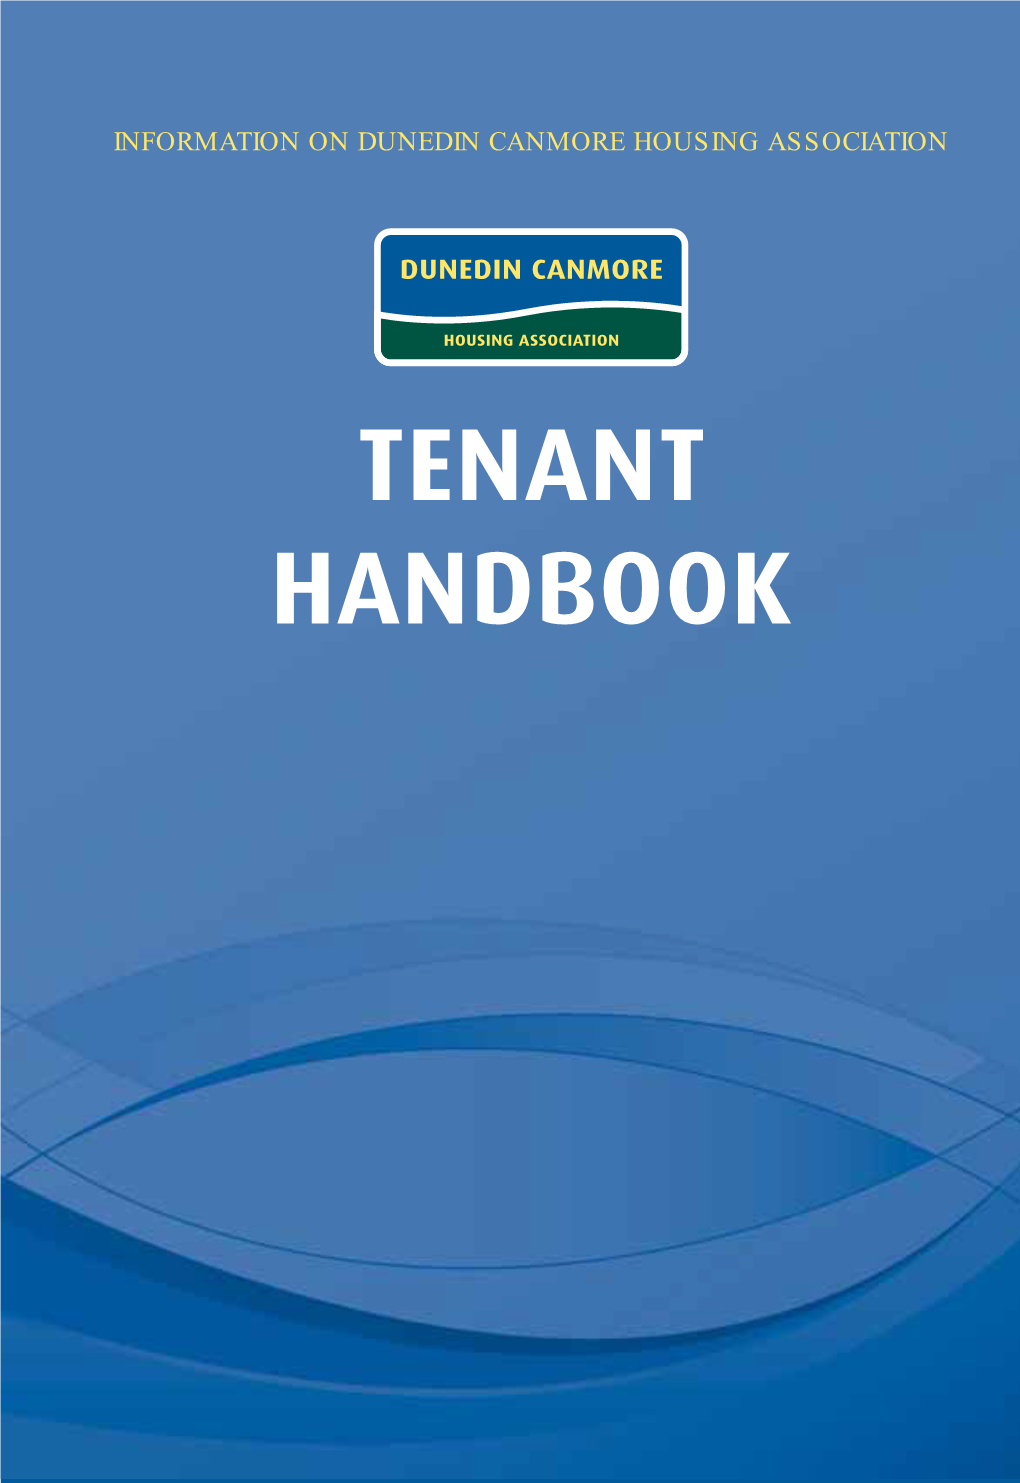 TENANT HANDBOOK CONTACT DETAILS “Welcome to the Dunedin to “Welcome Handbook